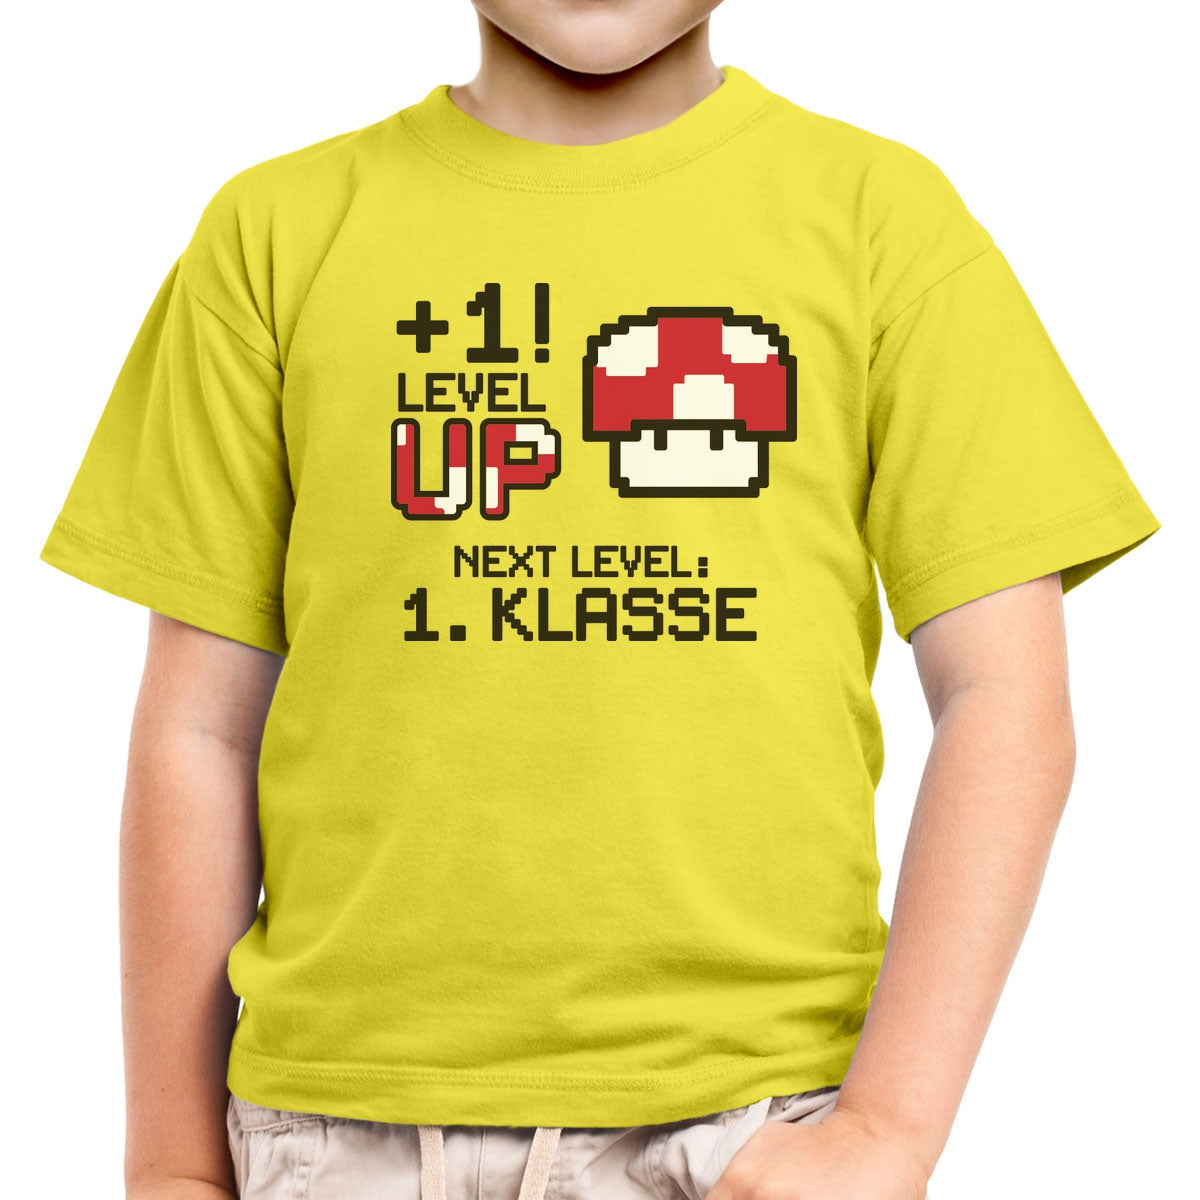 Zur Einschulung Plus1 - Level UP NEXT LEVEL 1. KLASSE Kinder Jungen T-Shirt